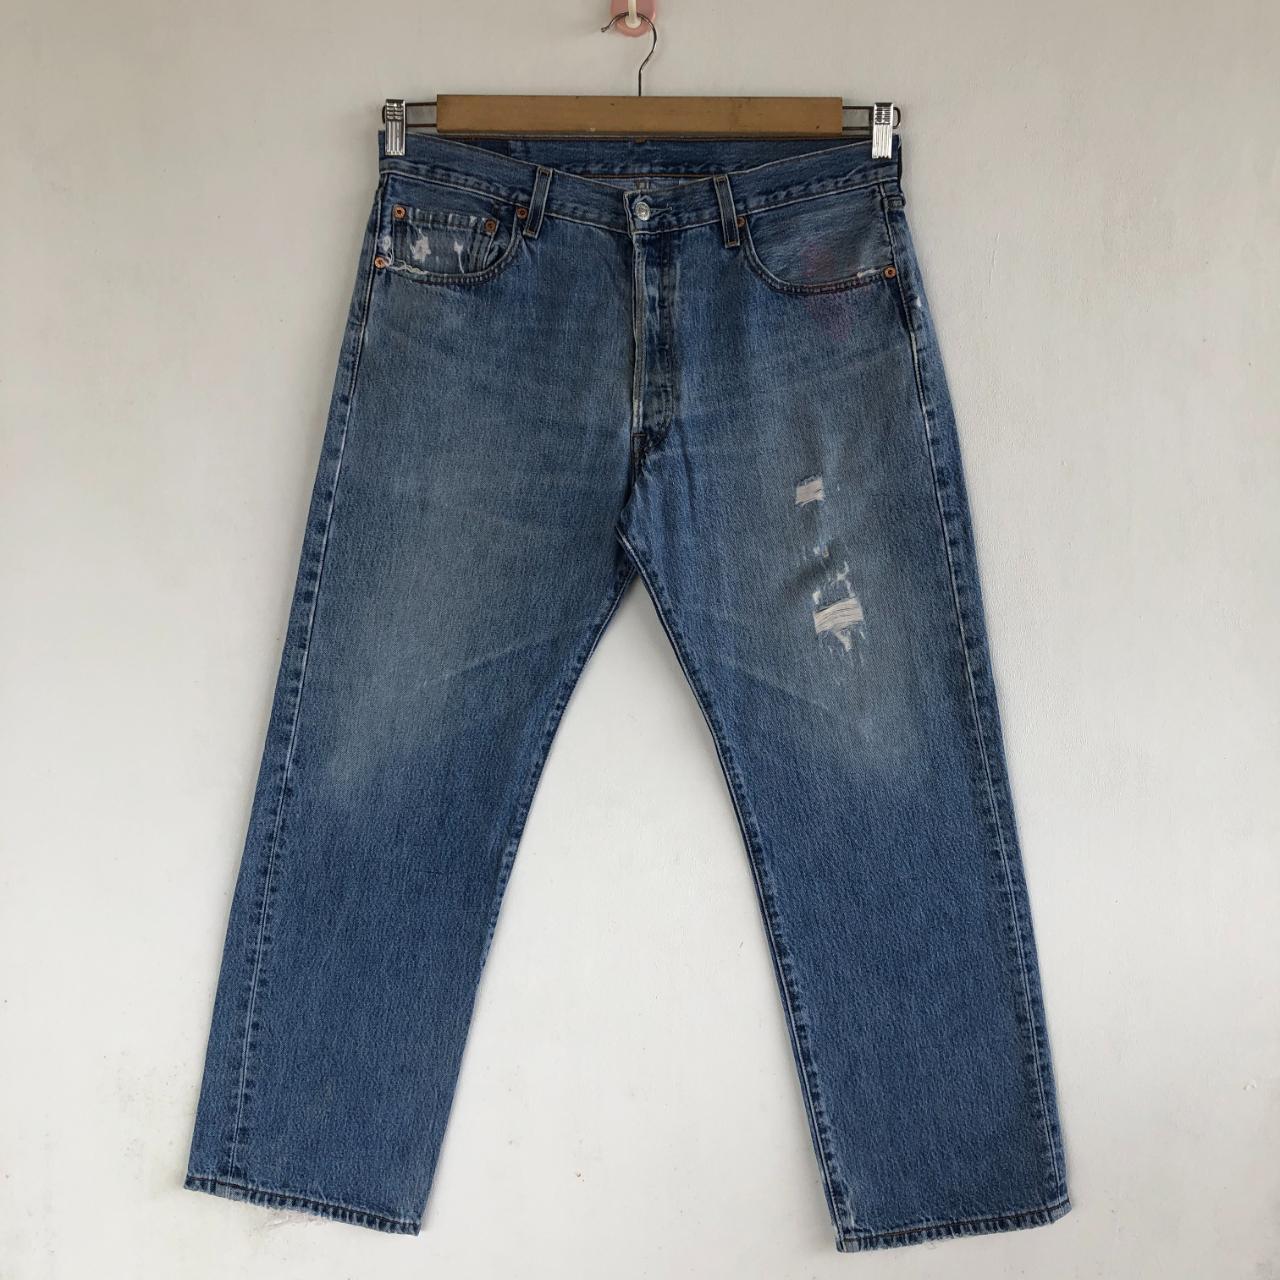 Vintage Levi's 501 Distressed Jeans Levis 501 Denim... - Depop